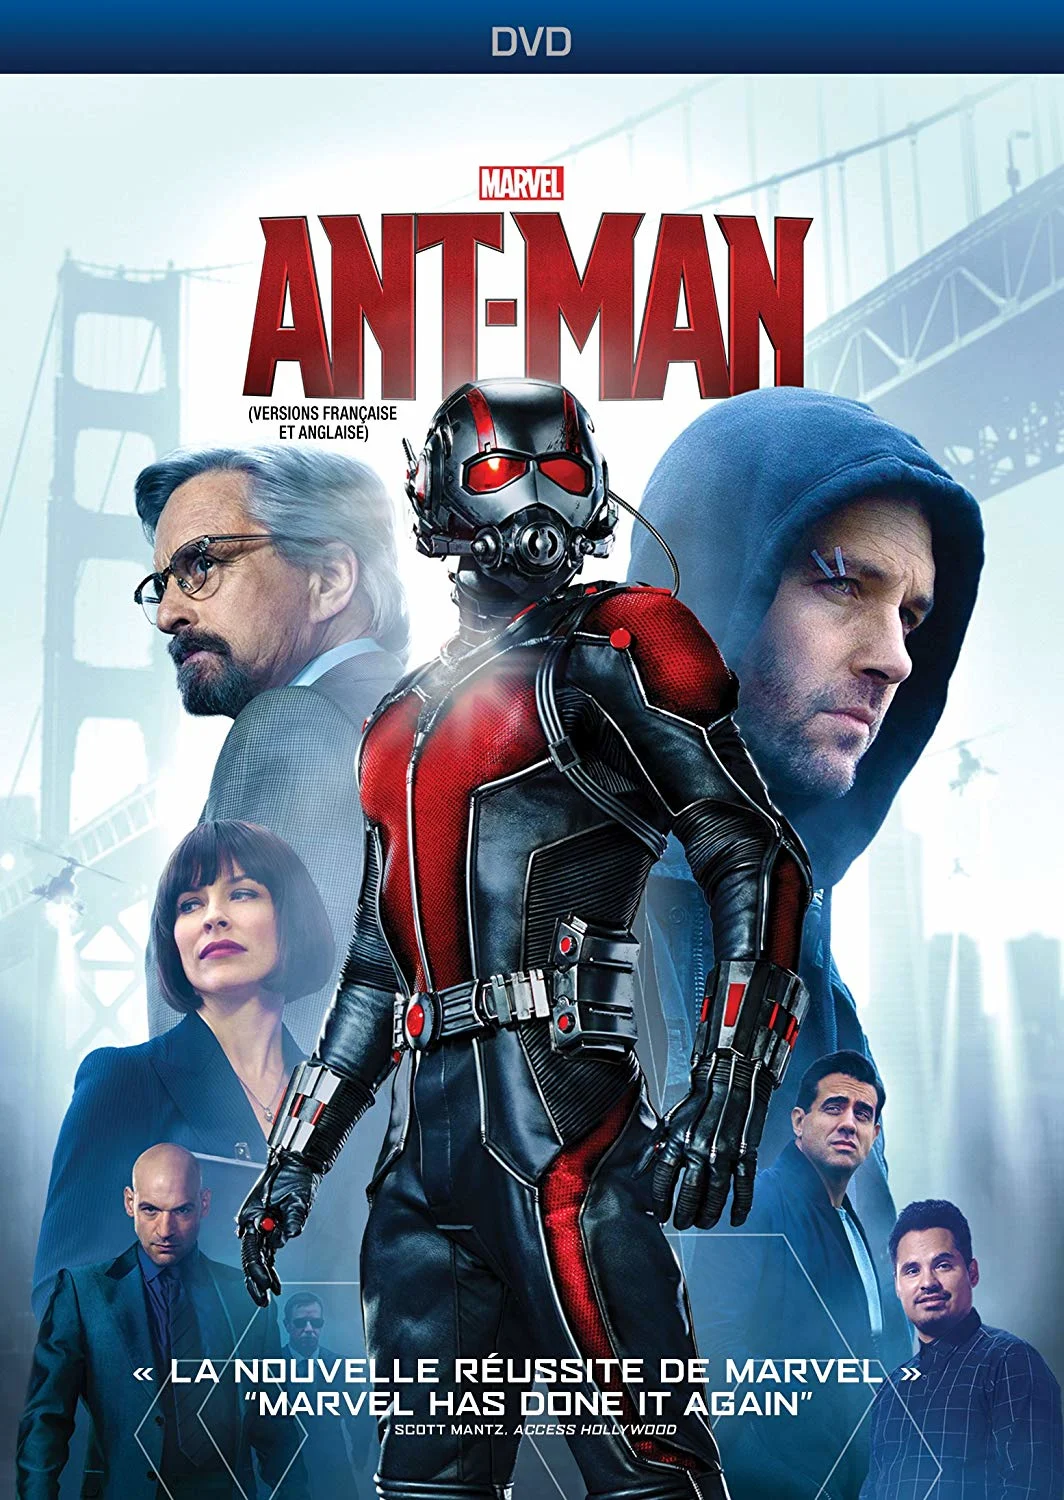 Ant-Man (DVD) on MovieShack